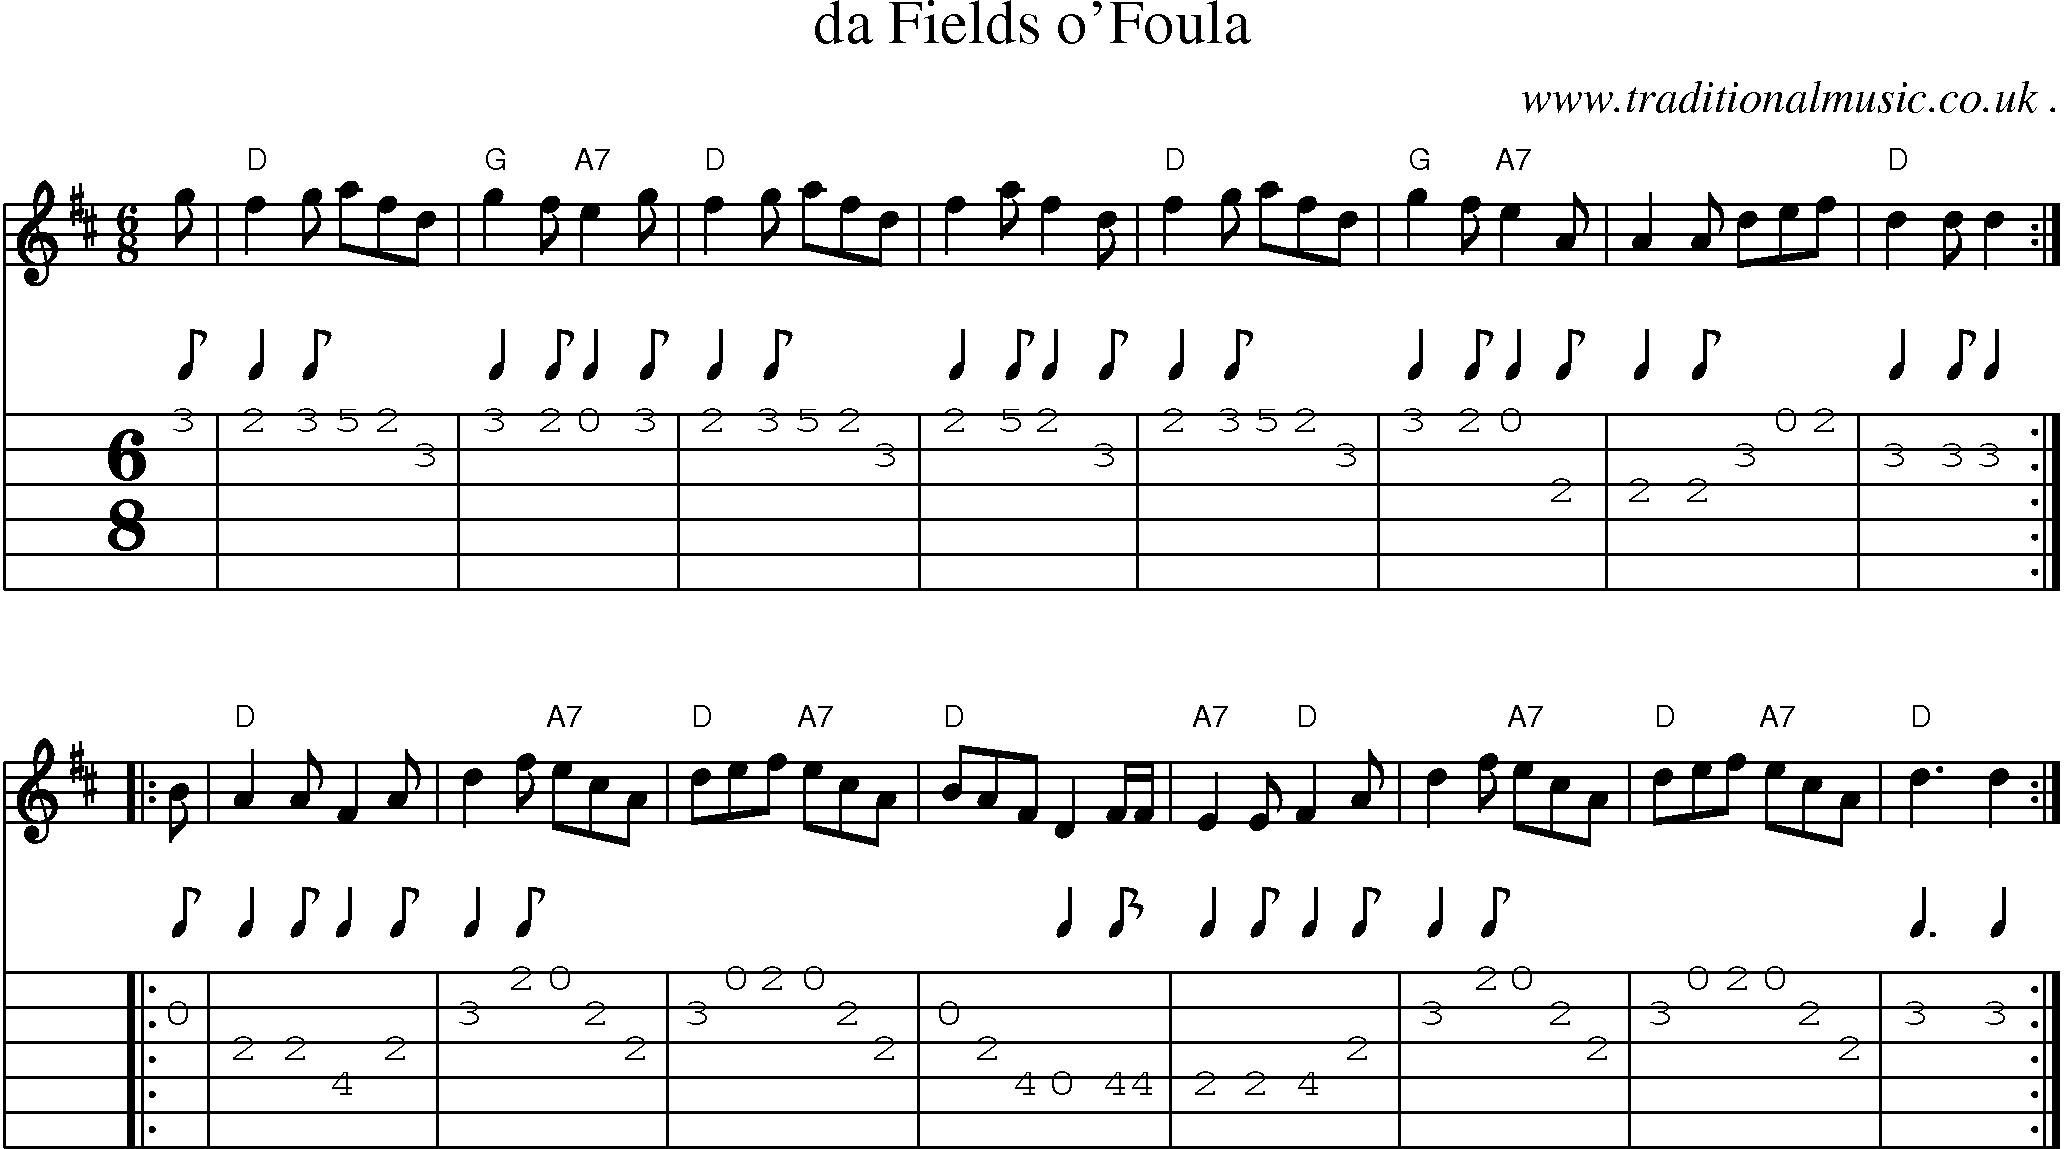 Sheet-music  score, Chords and Guitar Tabs for Da Fields Ofoula